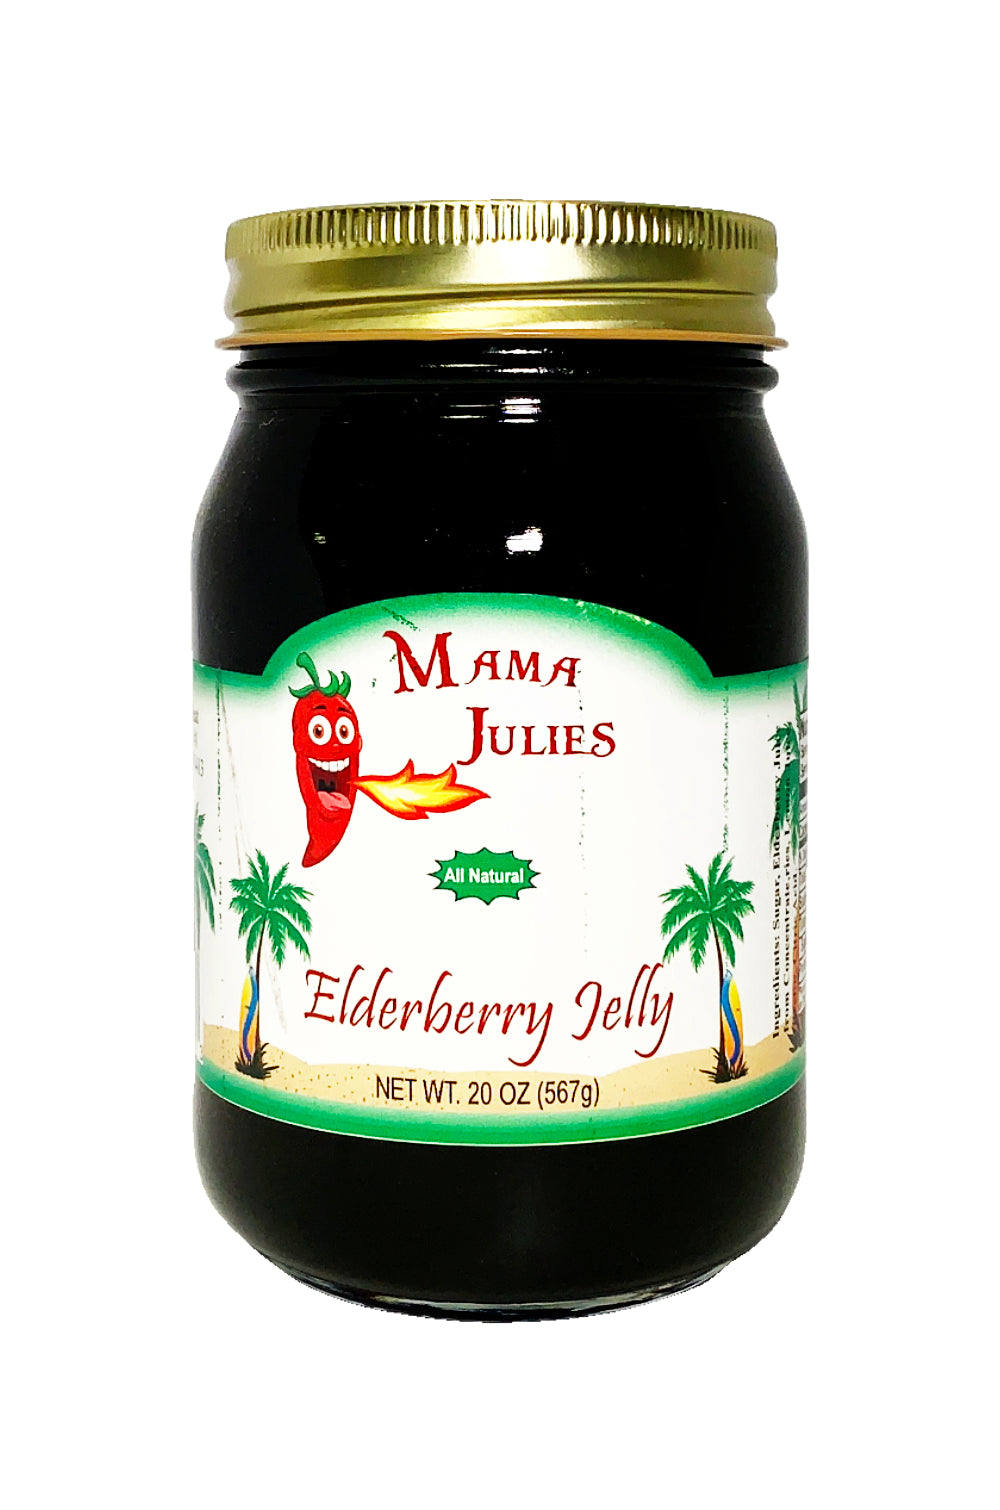 Mama Julie's Elderberry Jelly